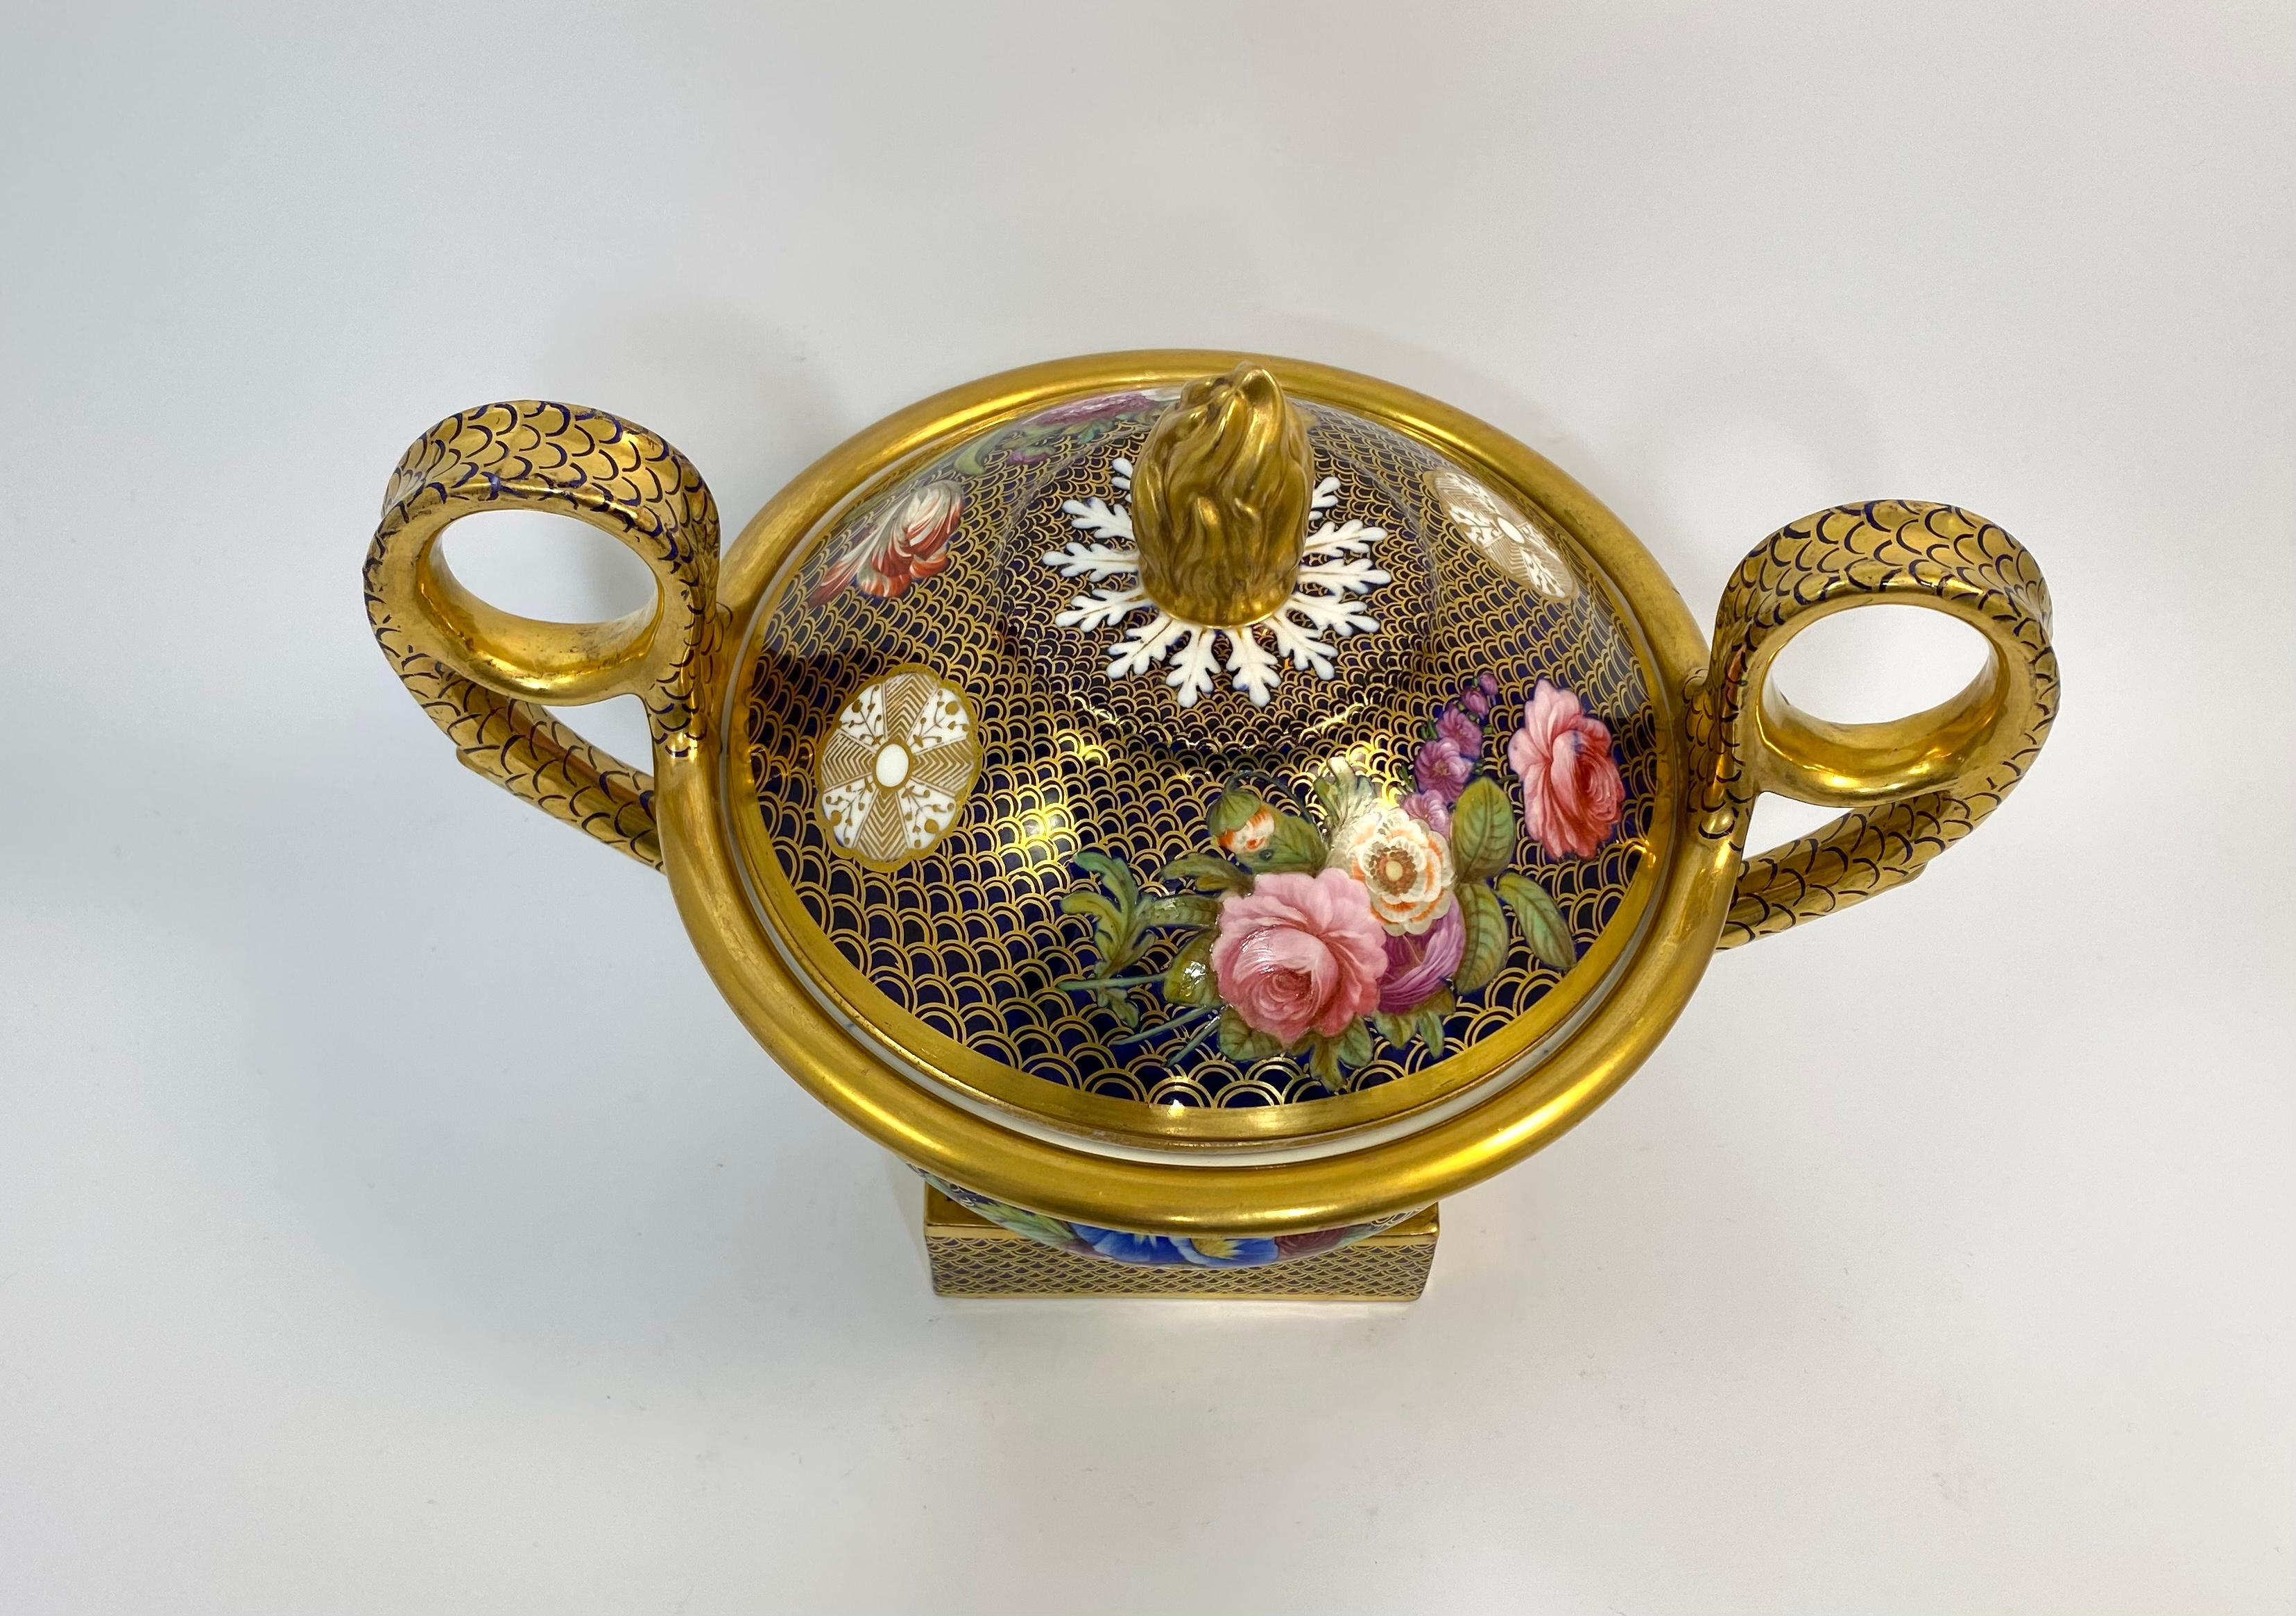 Regency Spode porcelain pot pourri and cover, ‘1166’ pattern, c. 1820.